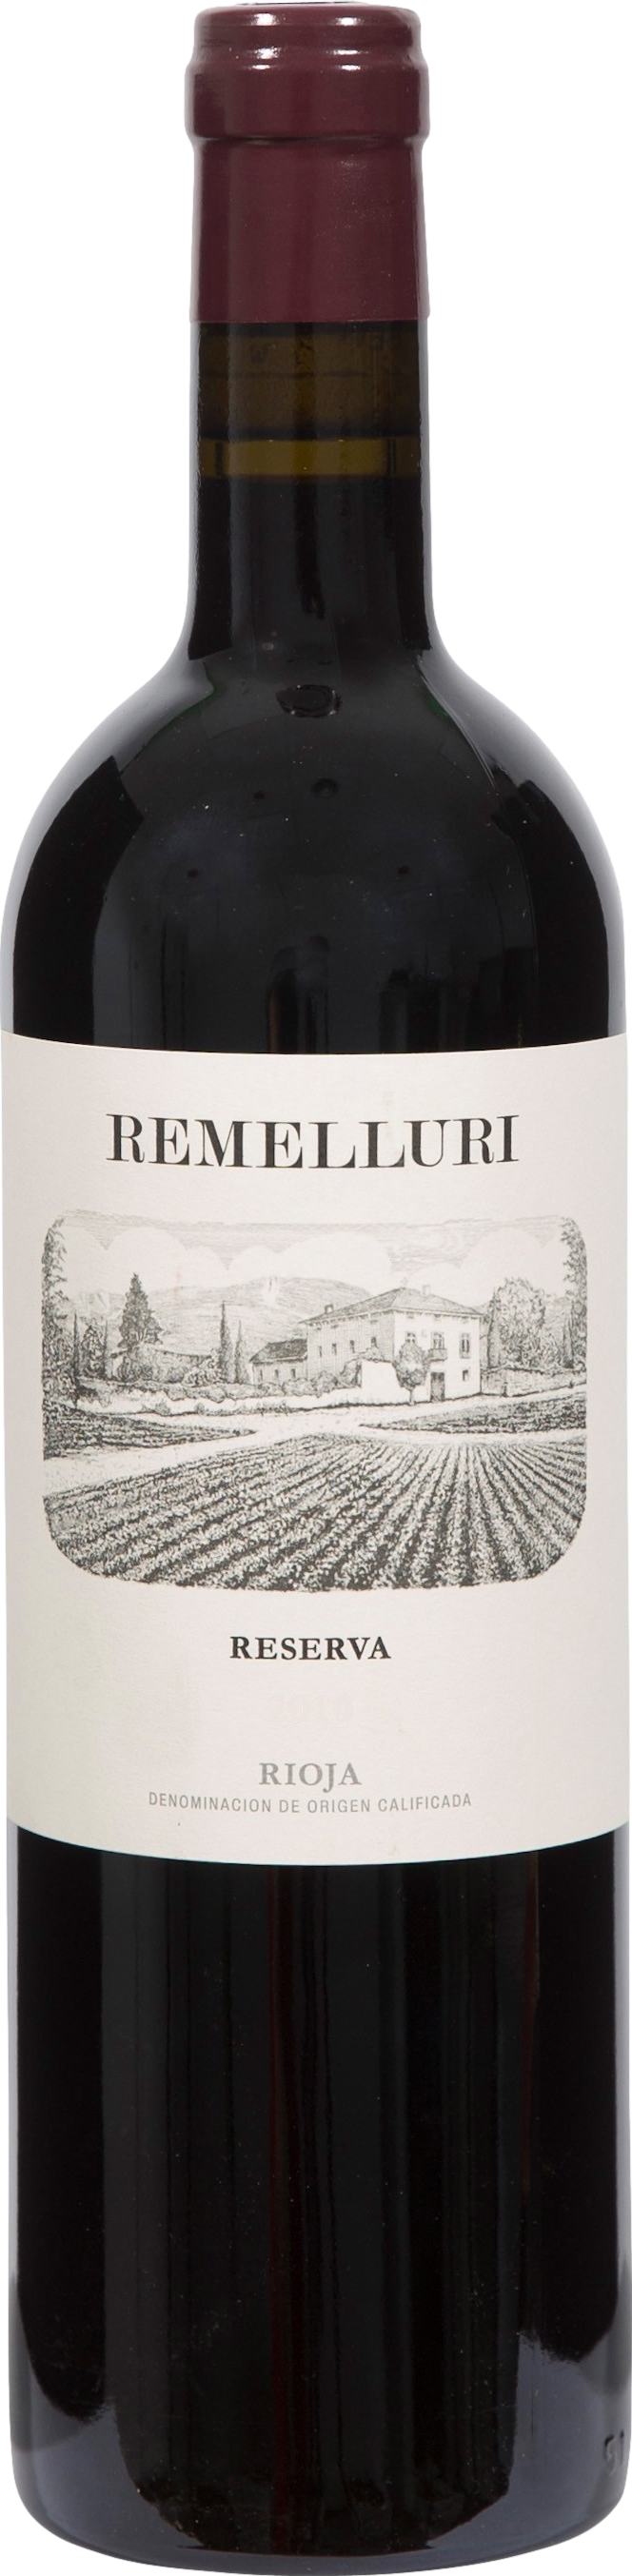 2016/46 günstig Kaufen-Remelluri Rioja Reserva 2016. Remelluri Rioja Reserva 2016 . 